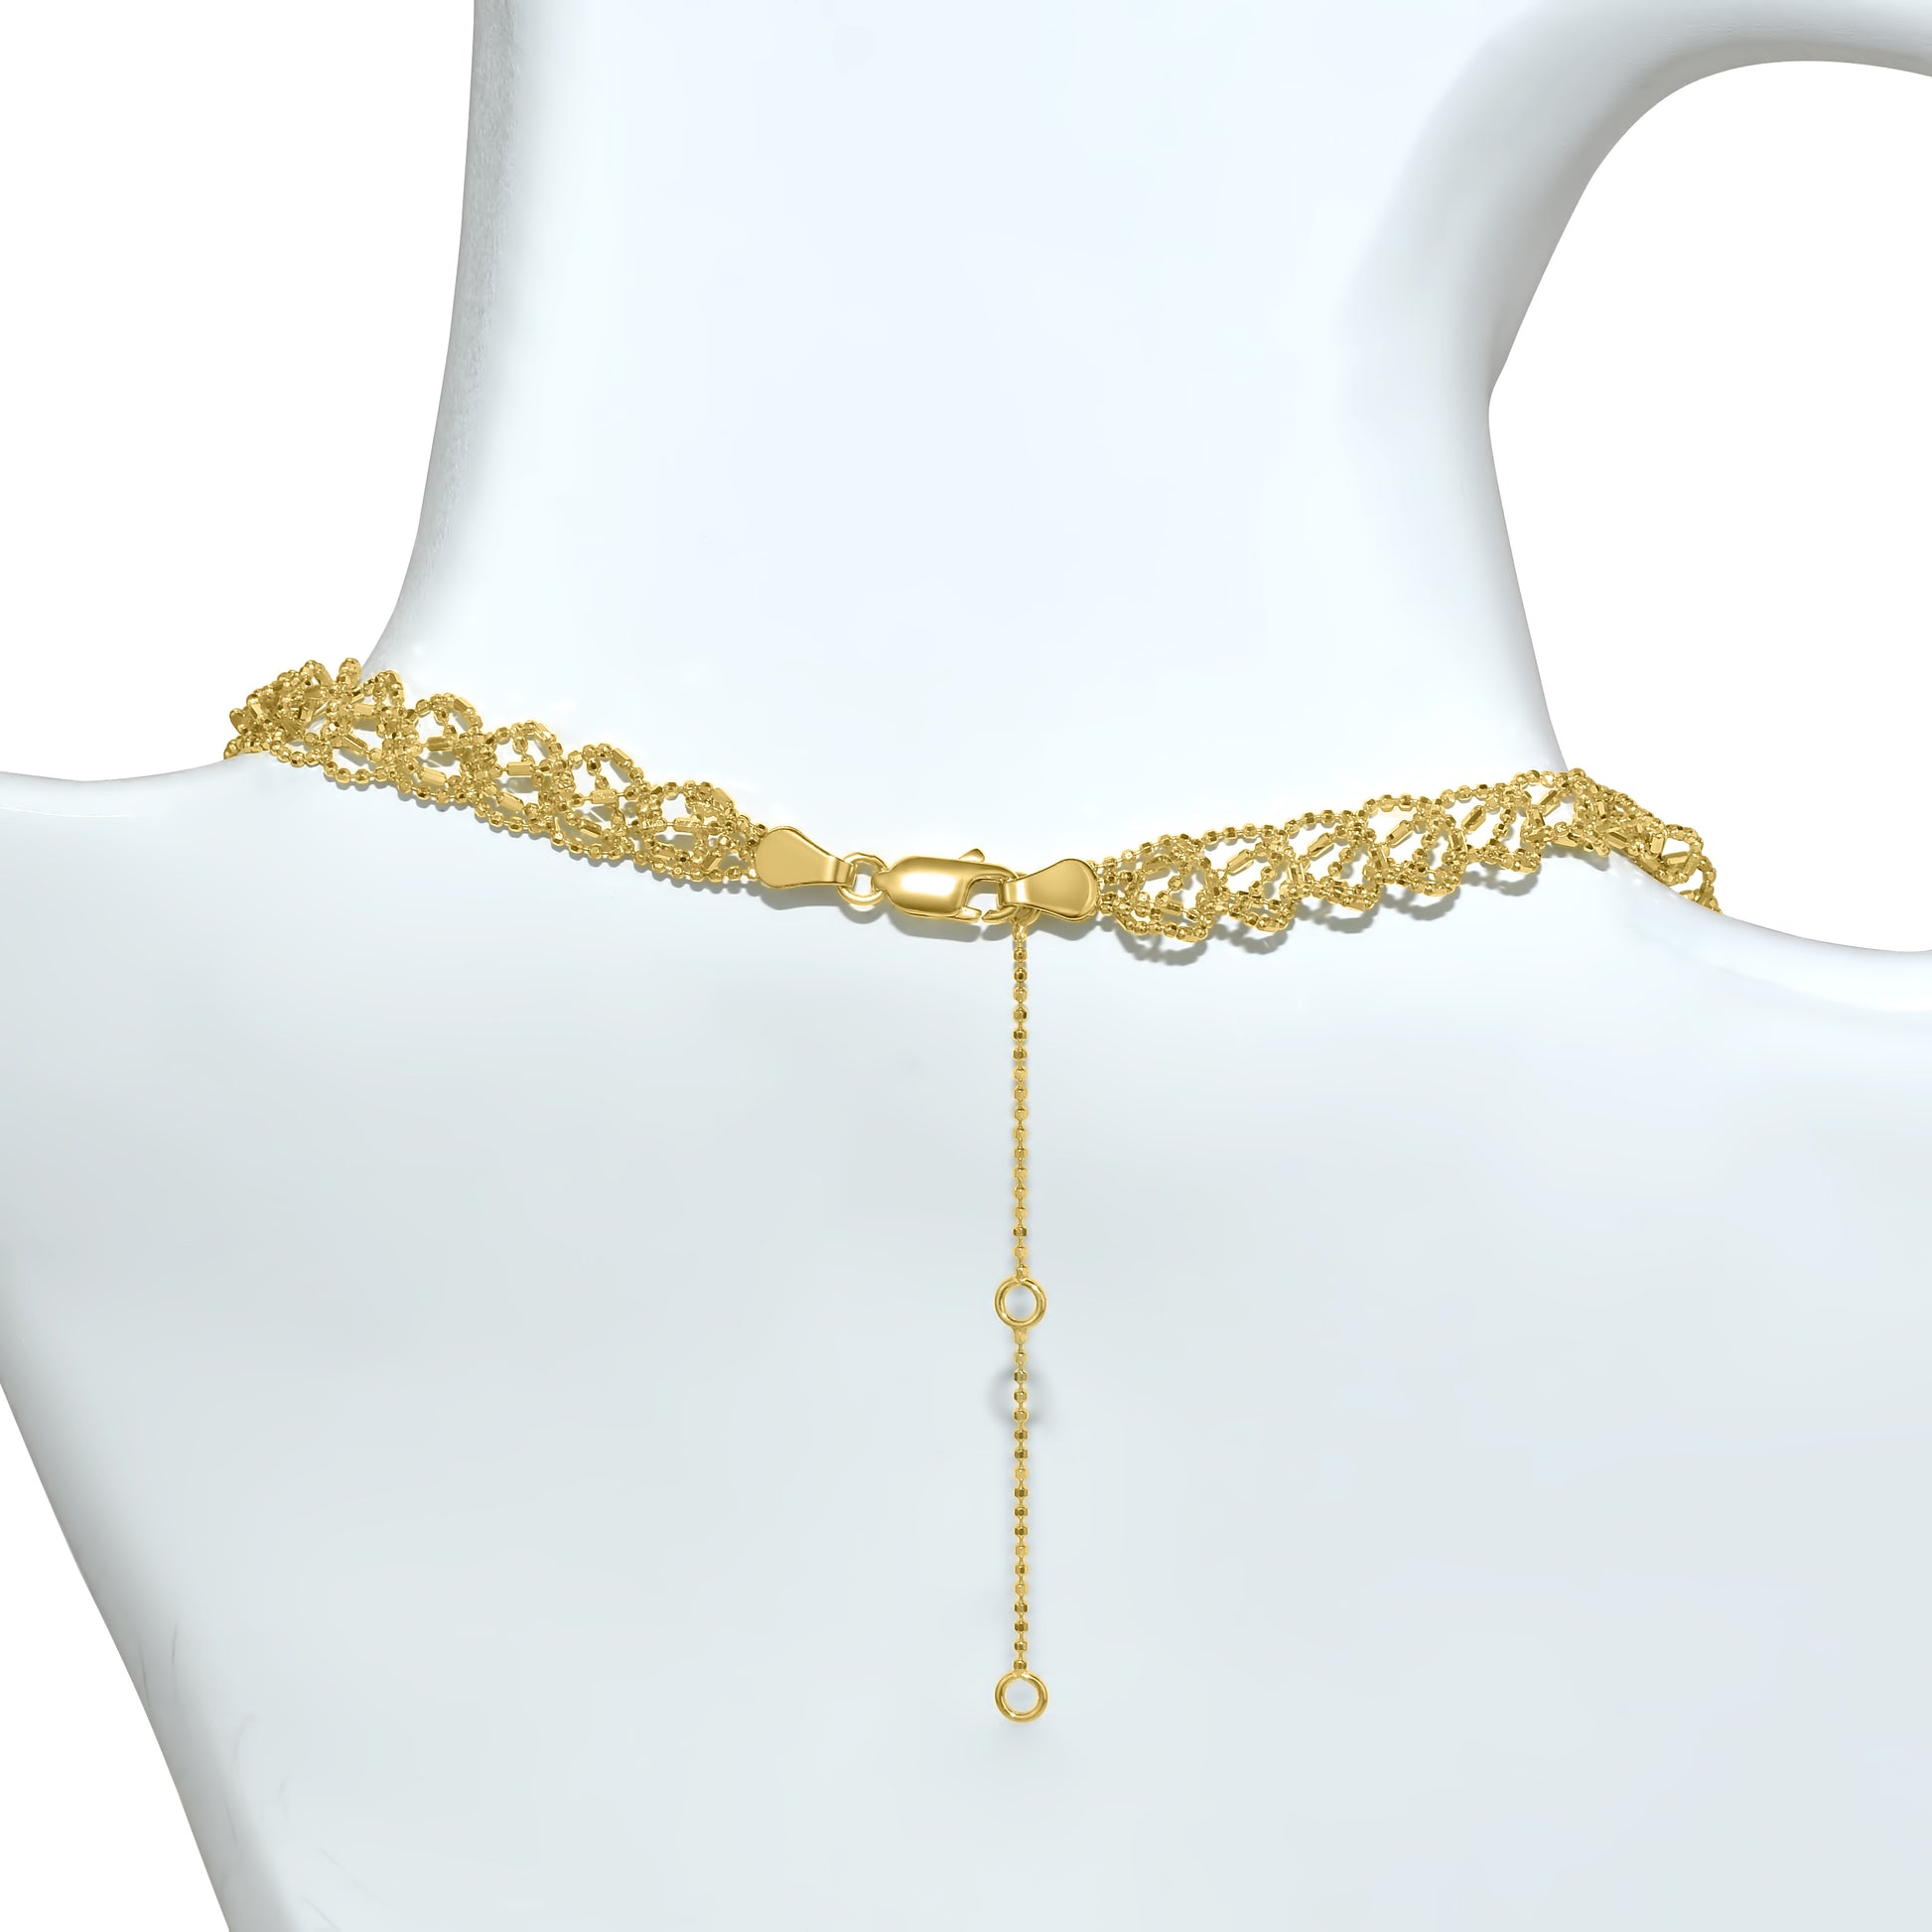 Séchic 14k Fancy Beaded Mesh Chain Necklace 17"